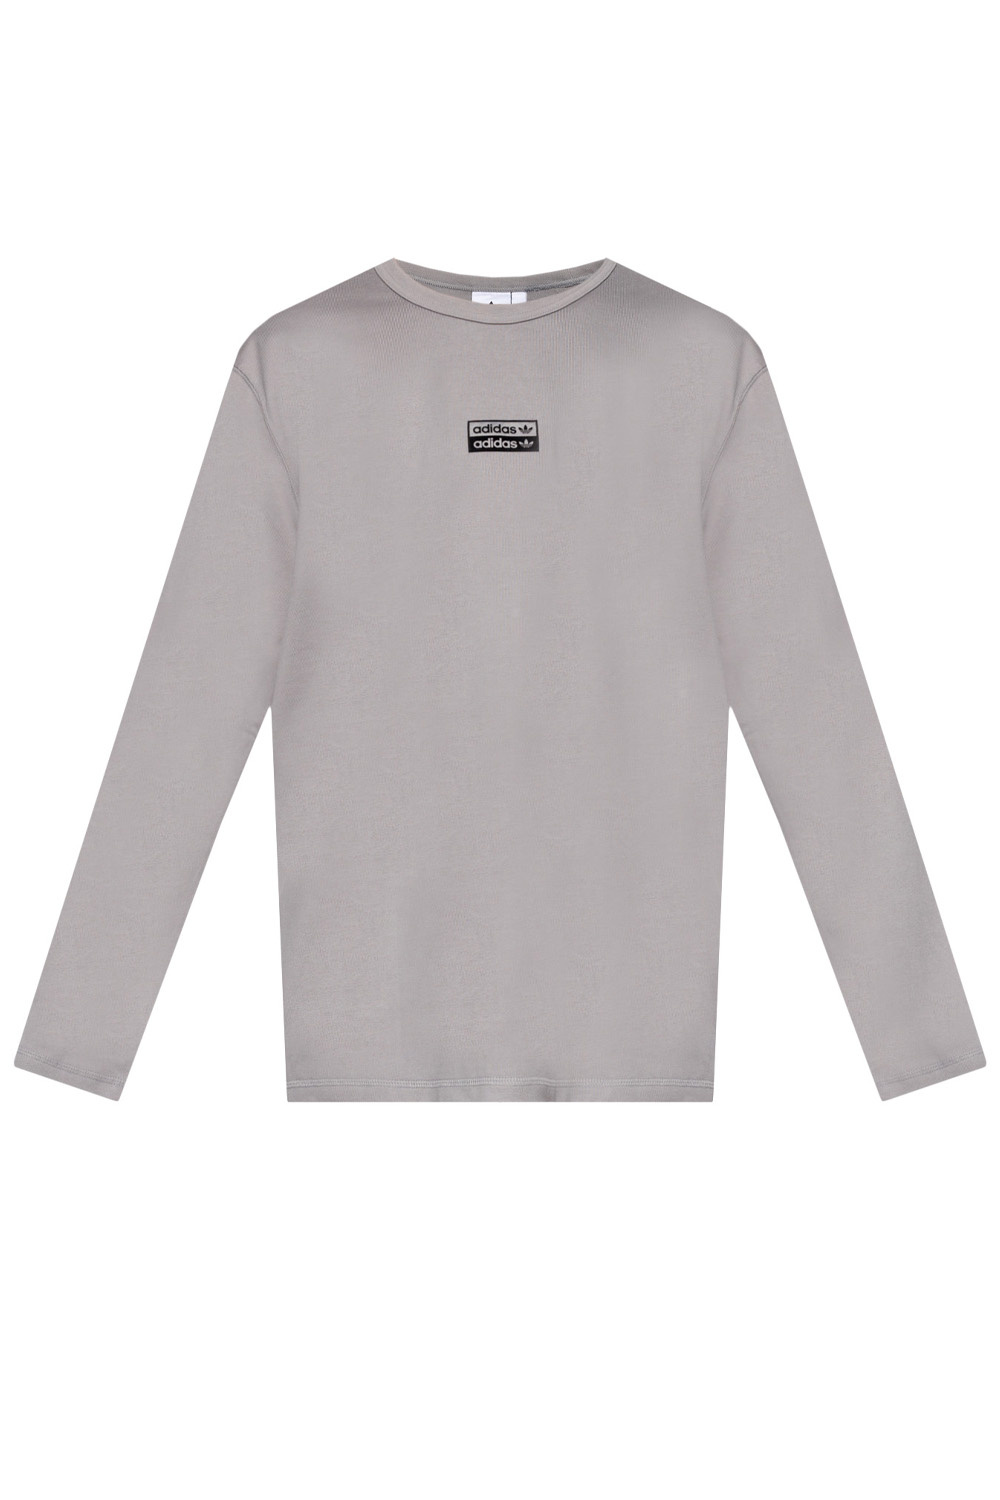 adidas ADIDAS - shirt Originals Originals - Grey IetpShops Burundi long sleeves with - 3569 T